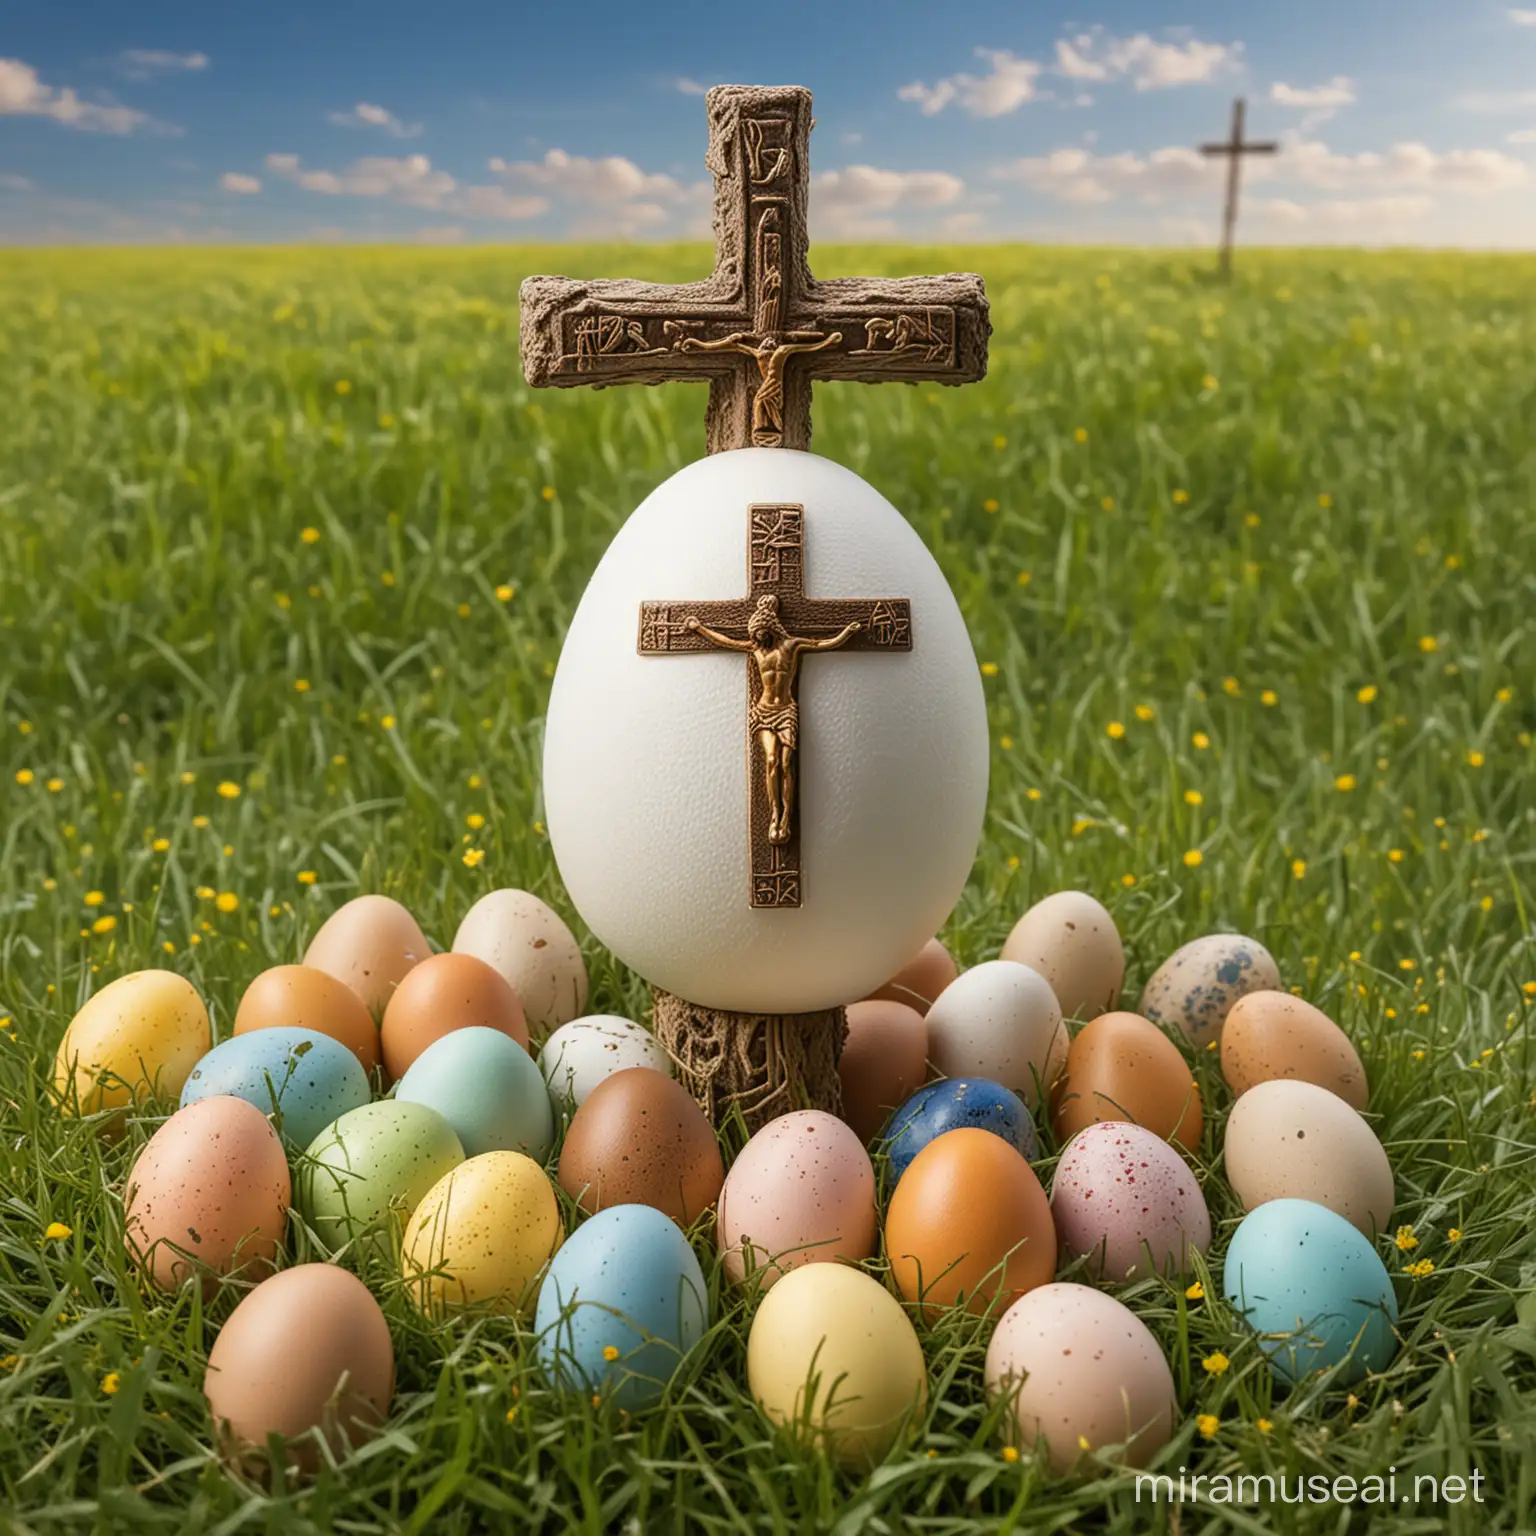 Resurrection Morning Jesus on Cross Amidst Vibrant Spring Eggs